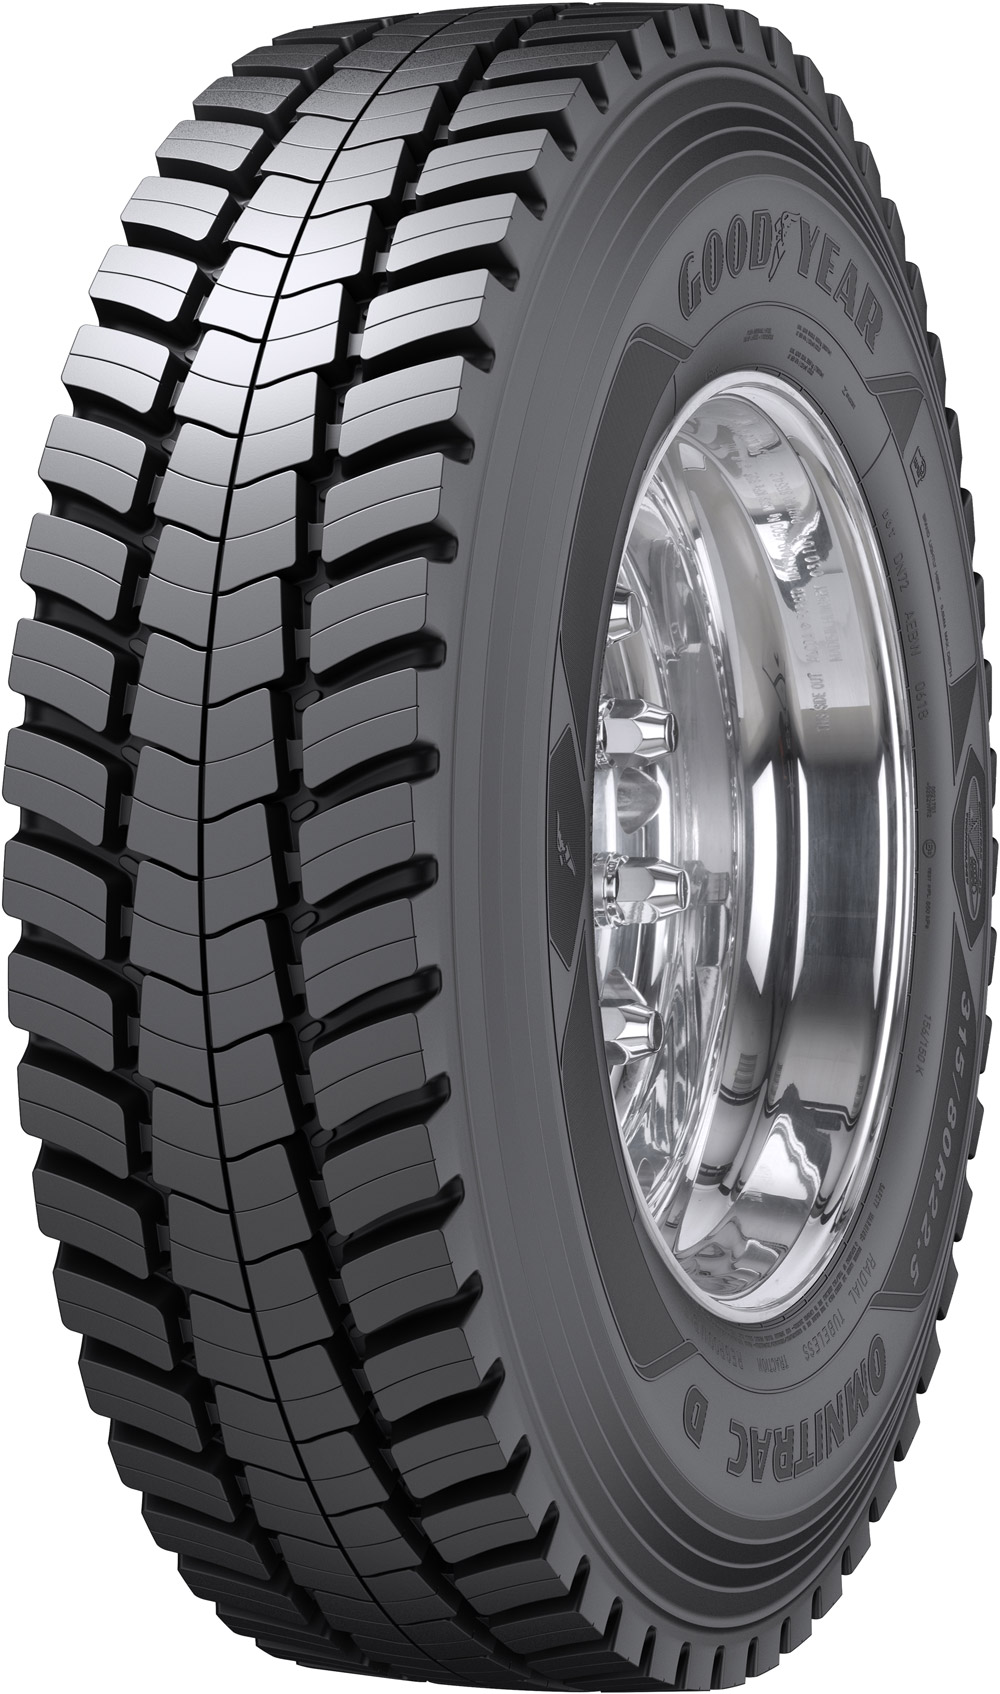 product_type-heavy_tires GOODYEAR OMNITRAC D 20 TL 315/80 R22.5 156K